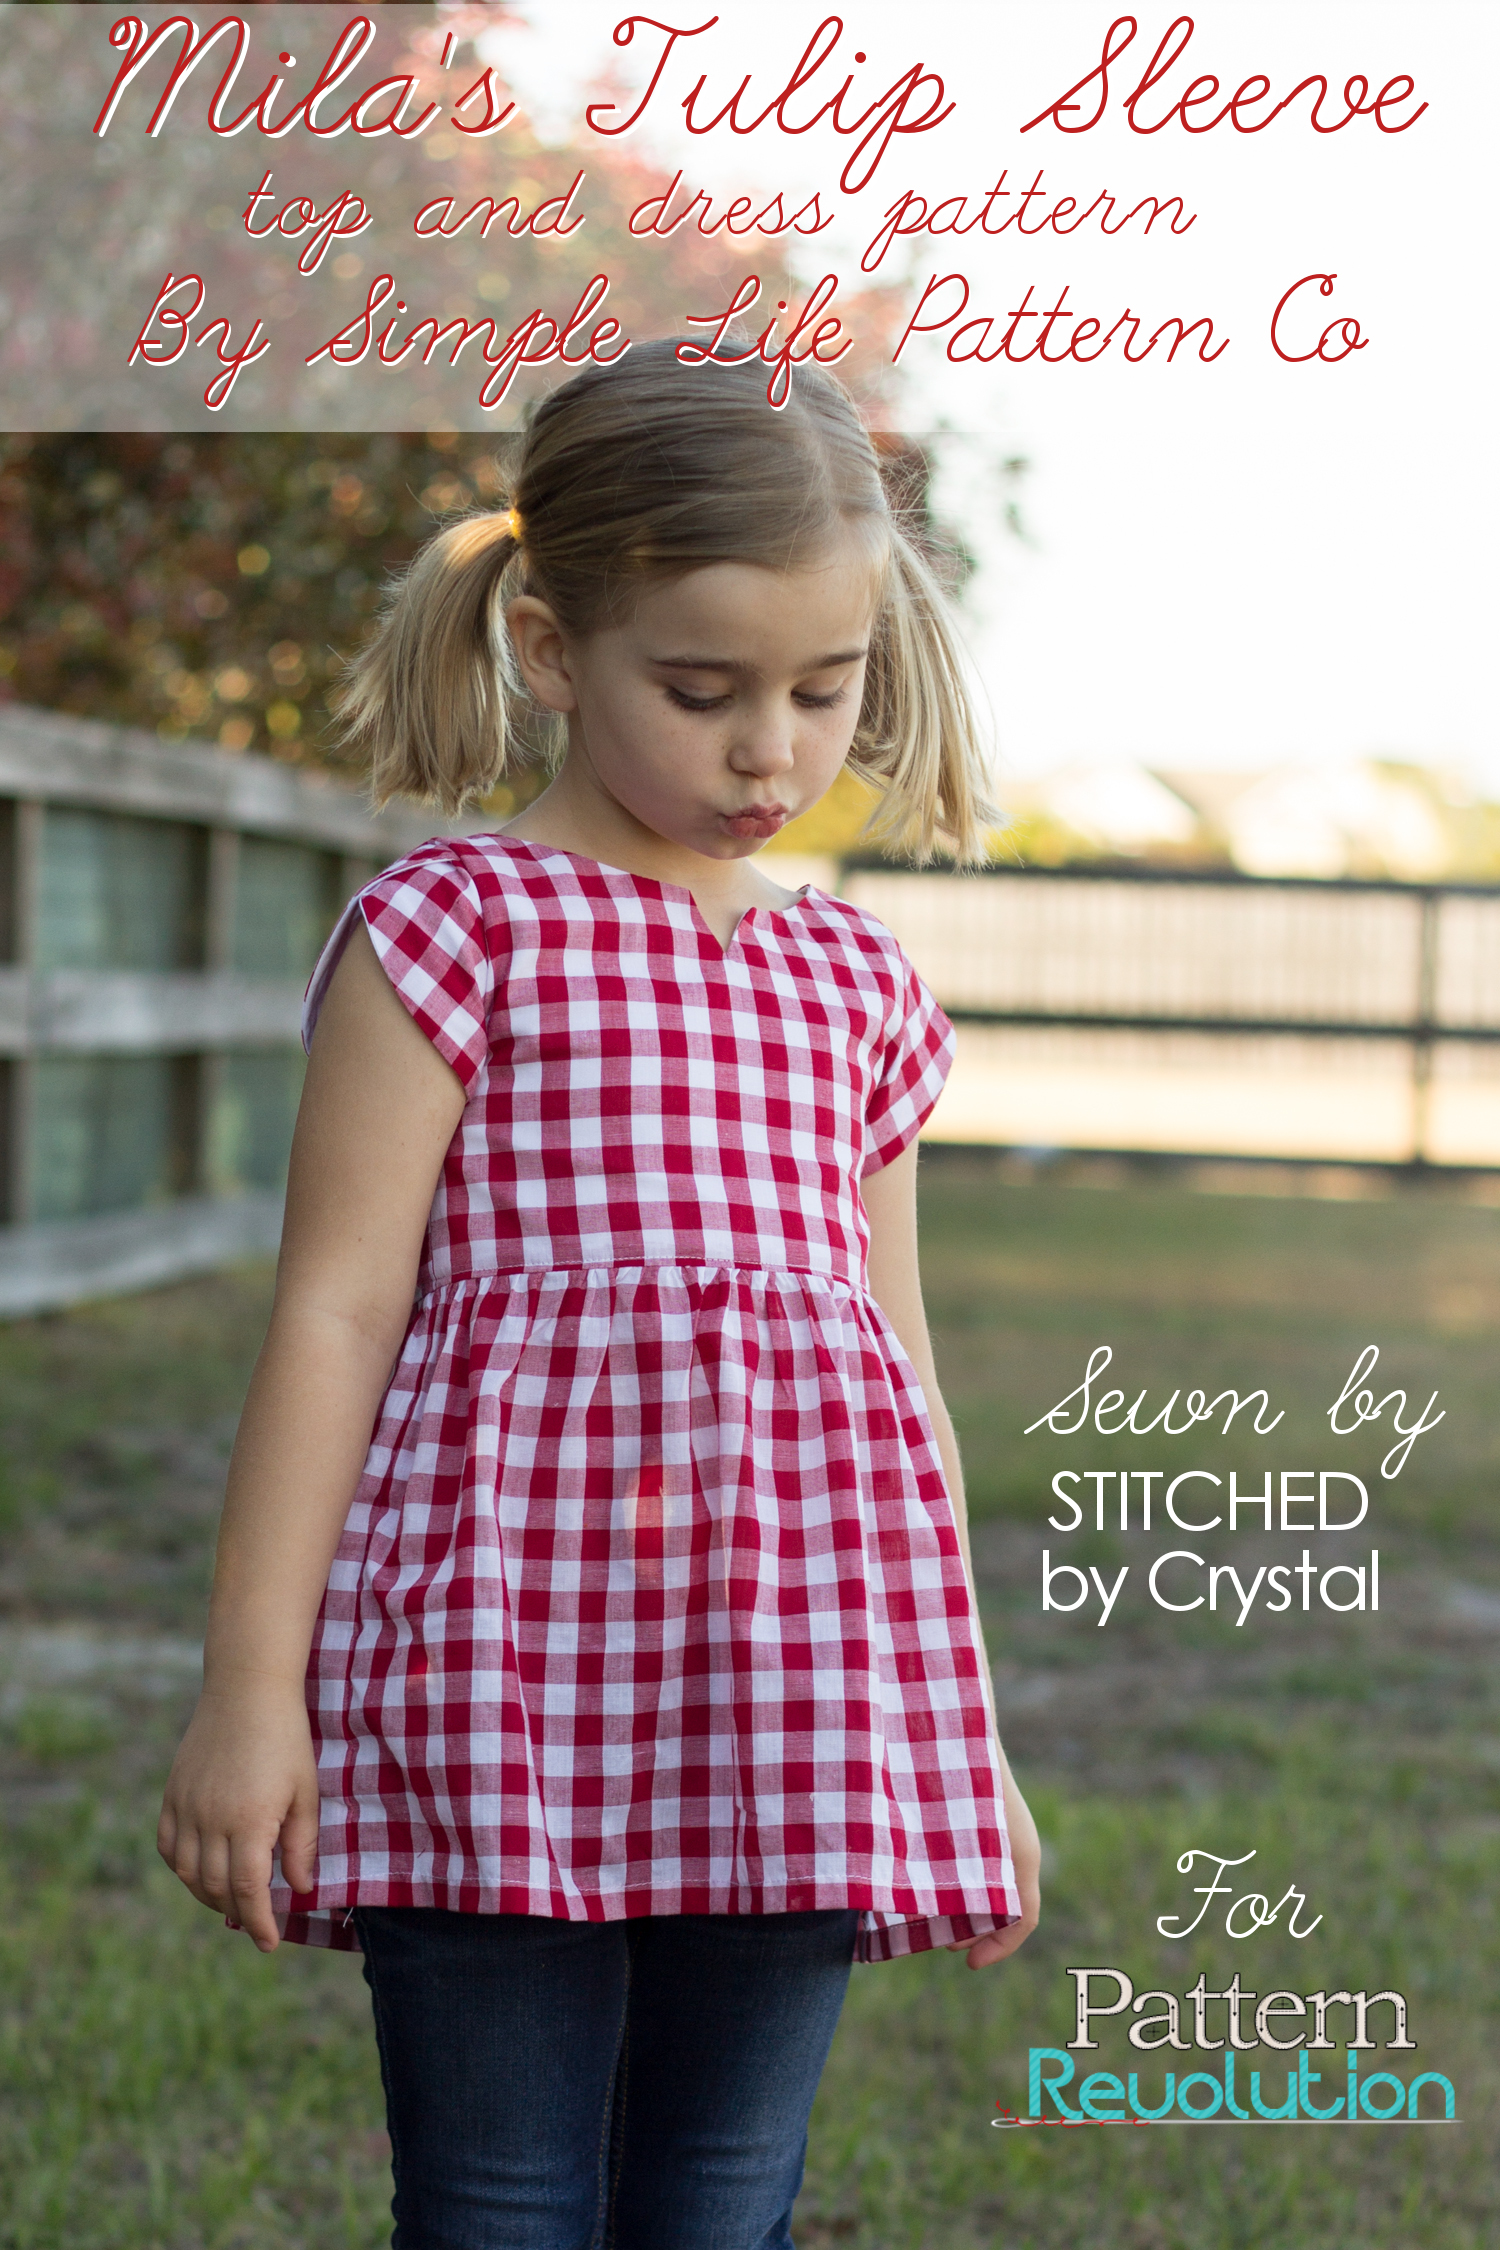 Free sewing pattern: Little girls tulip sleeve dress – Sewing